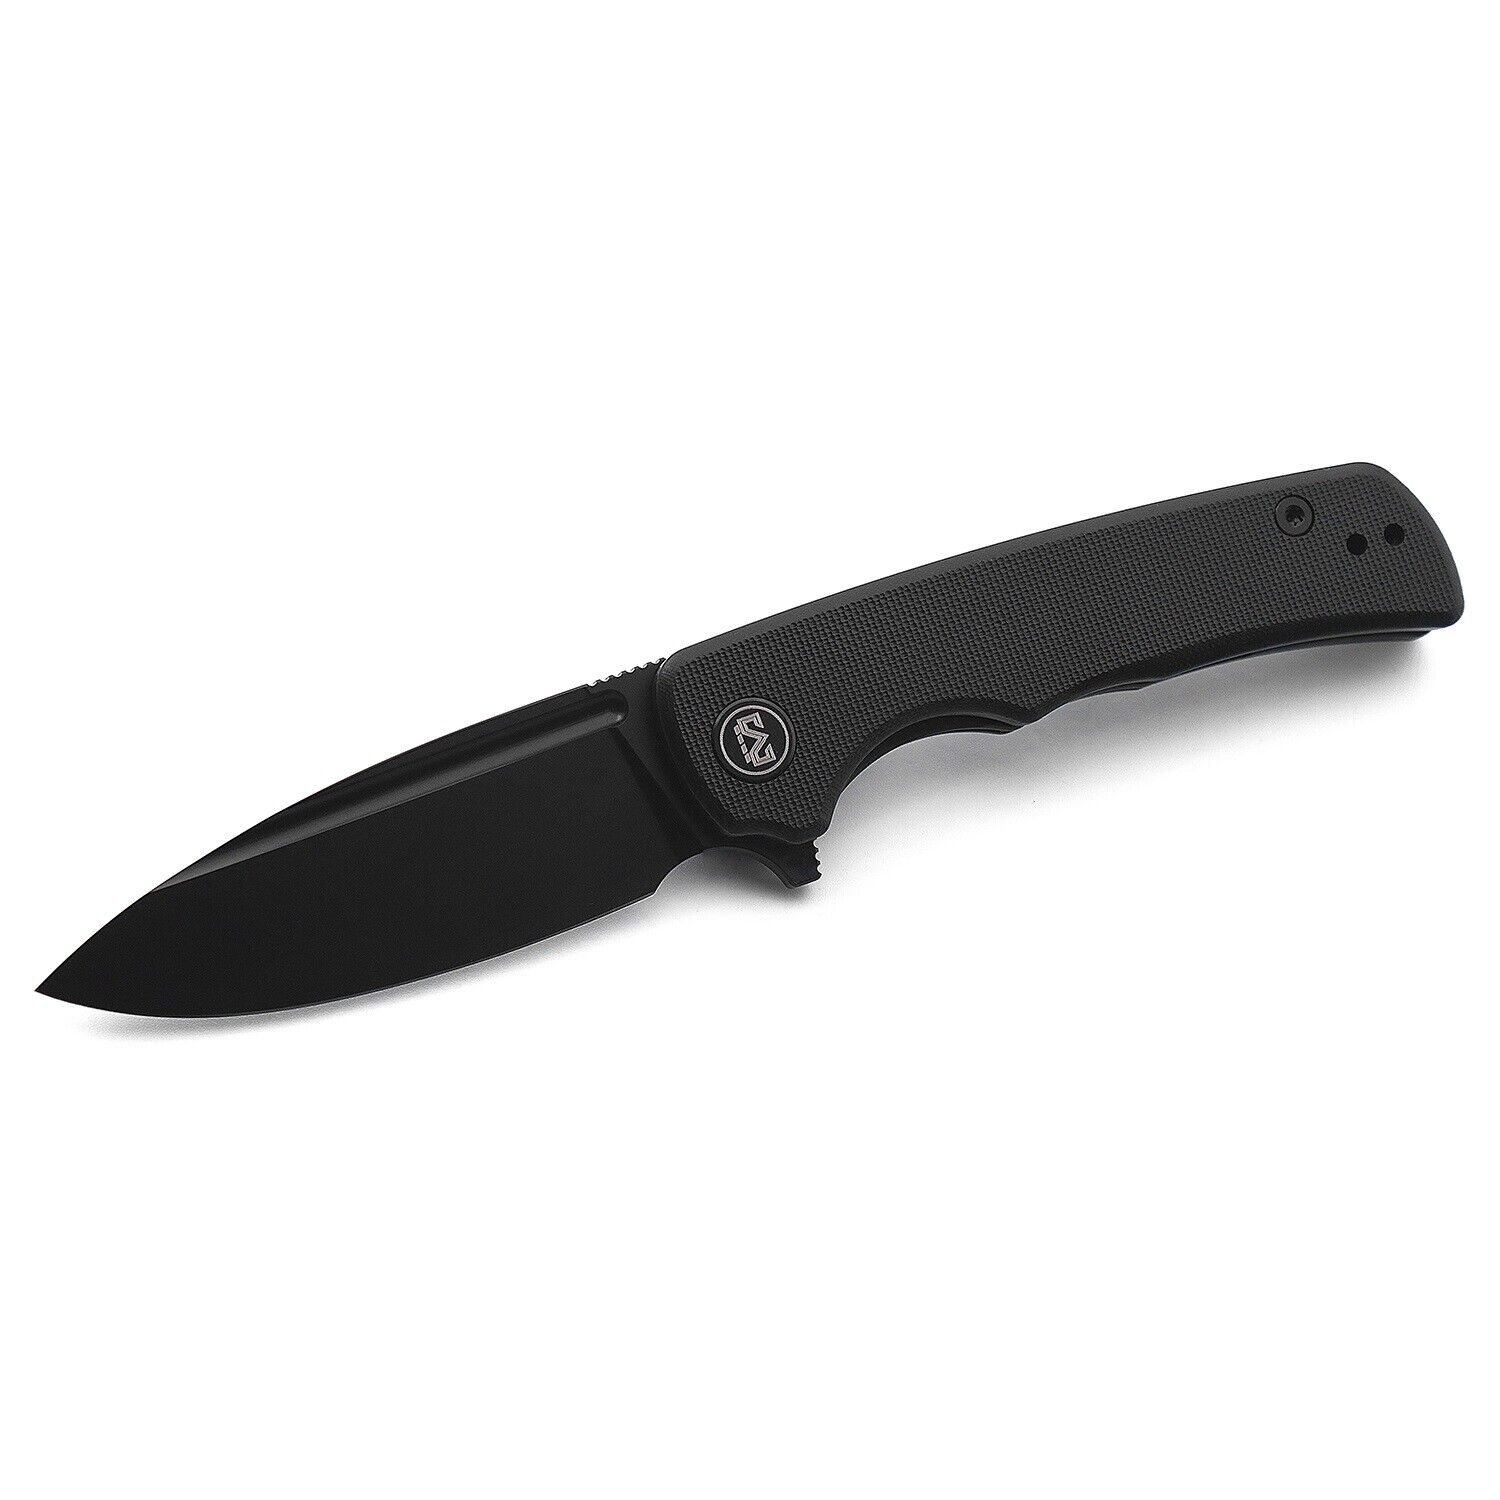 Miguron Talism Folding Knife Black G10 Handle D2 Plain Black Blade MGR-810BK